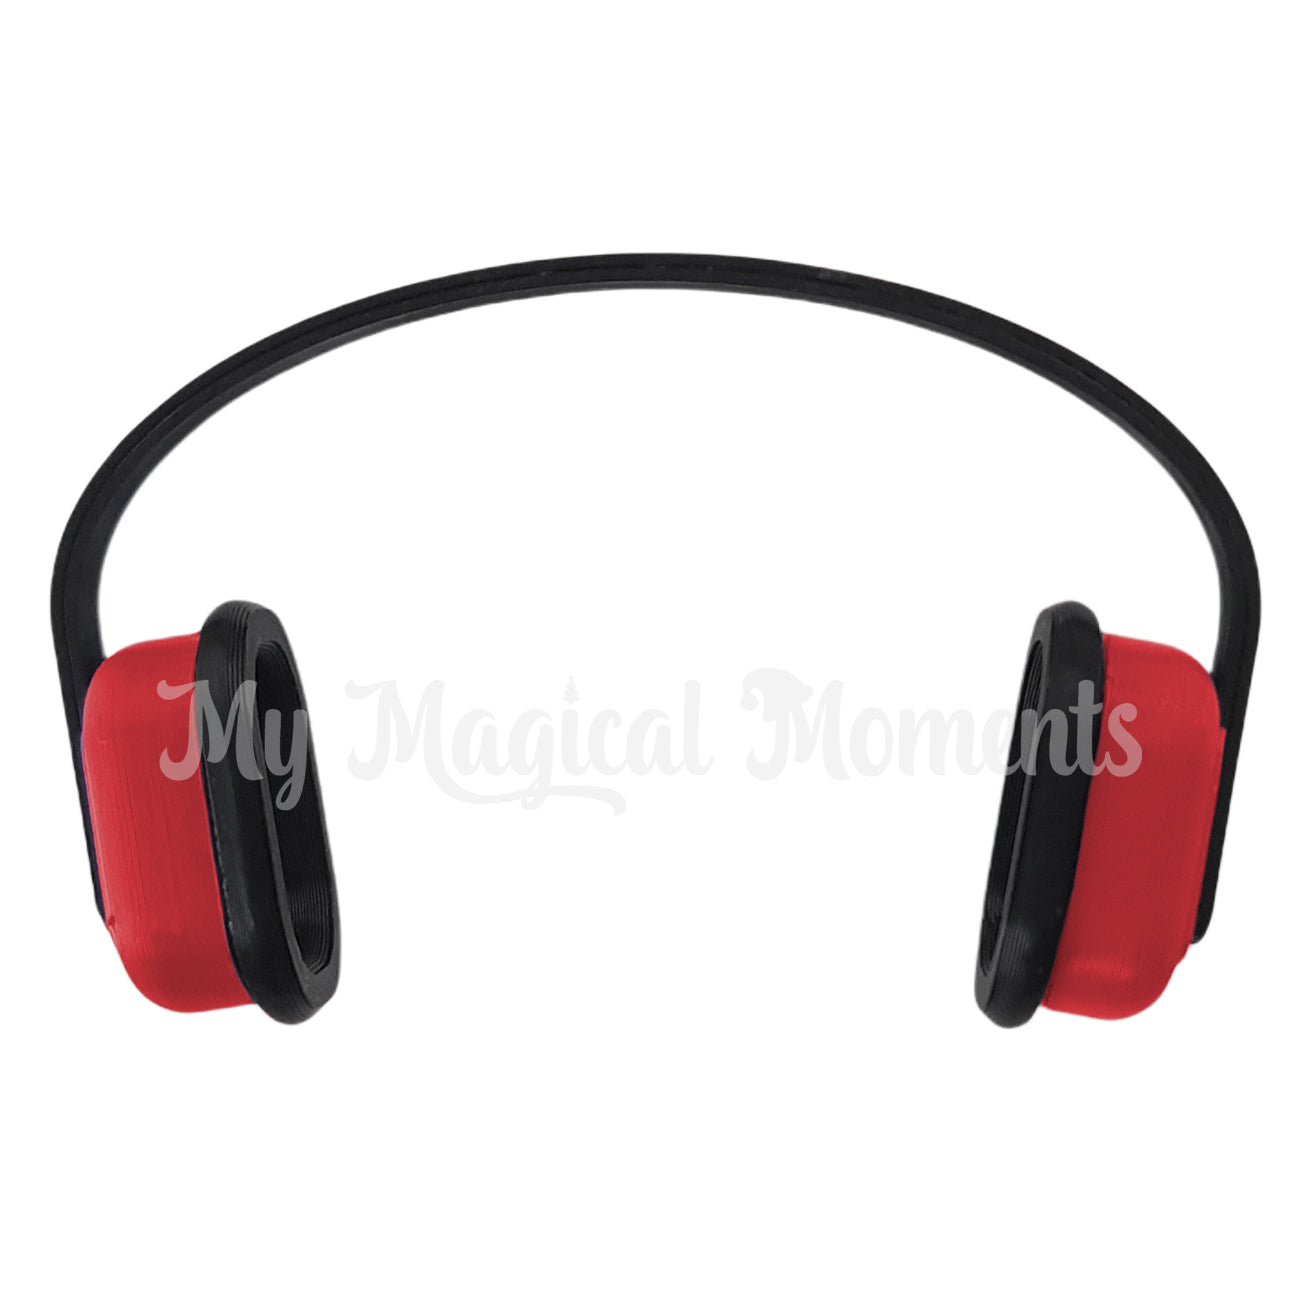 Elf Sized sensory headphones -Red